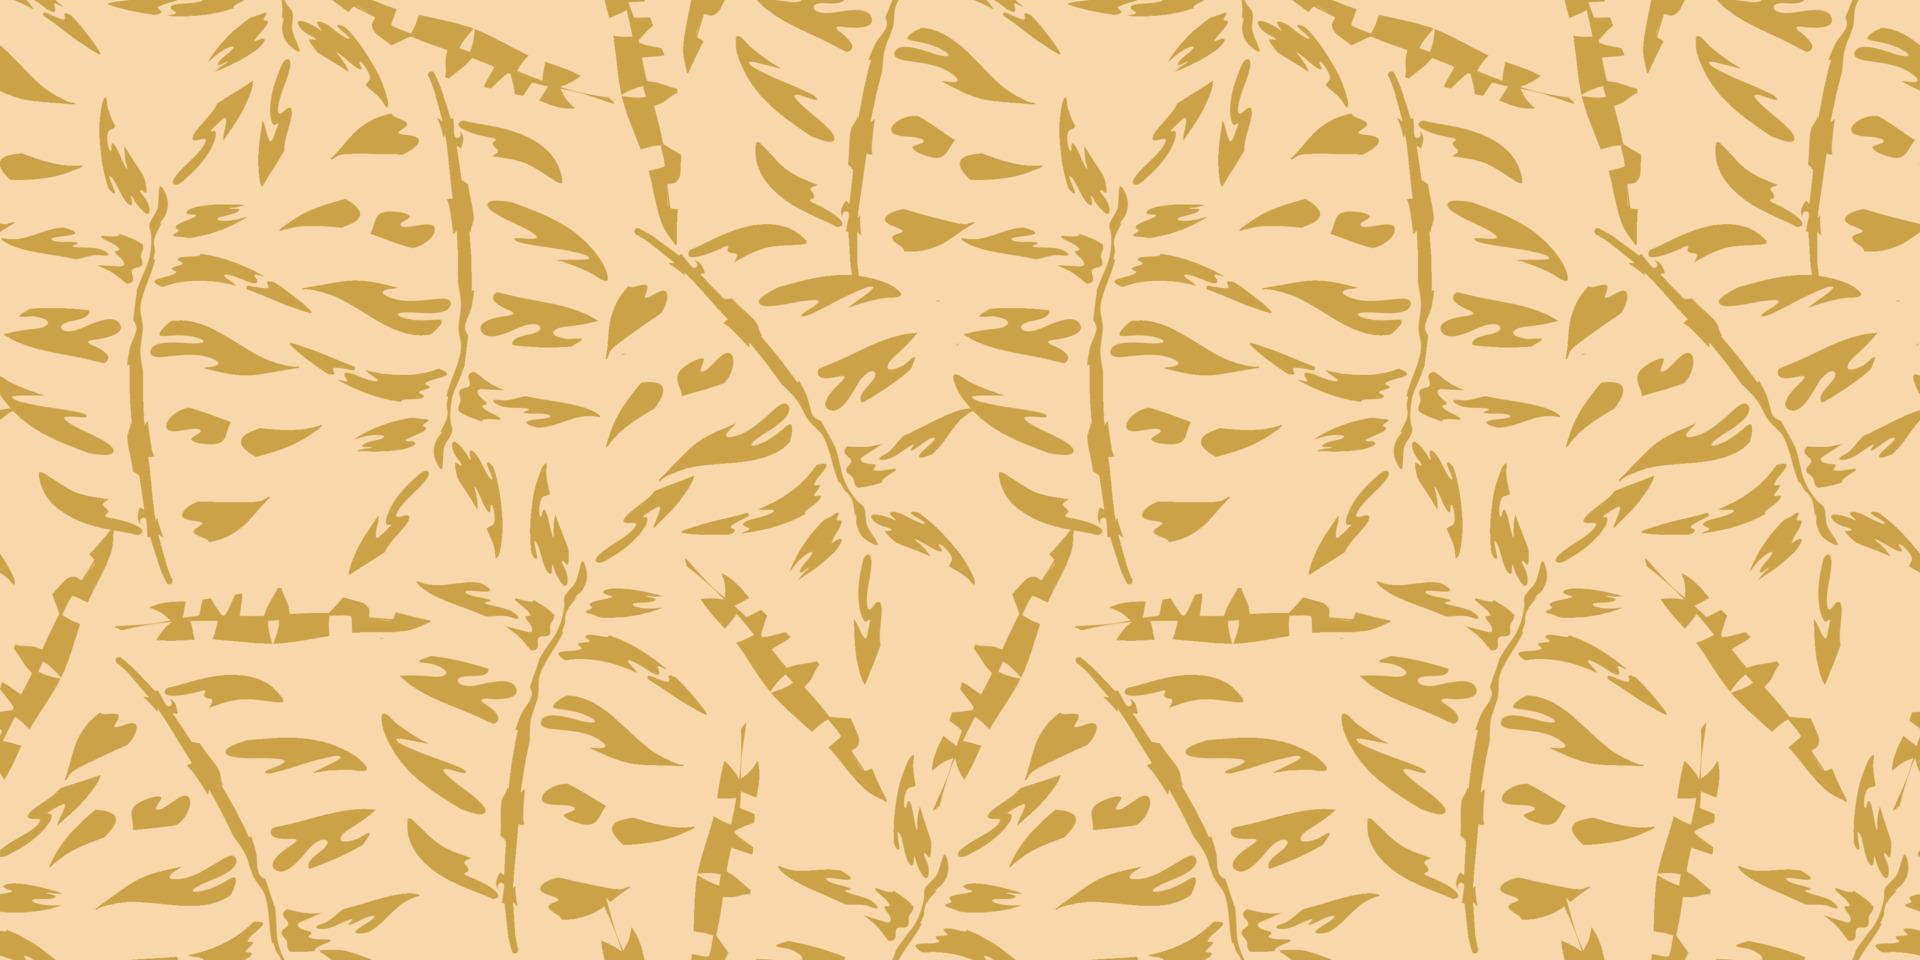 patrón estético boho jungle sin fisuras para el diseño de impresión. fondo floral tropical botánico boho. patrón de selva floral exótico moderno. textura geométrica. diseño de impresión vector